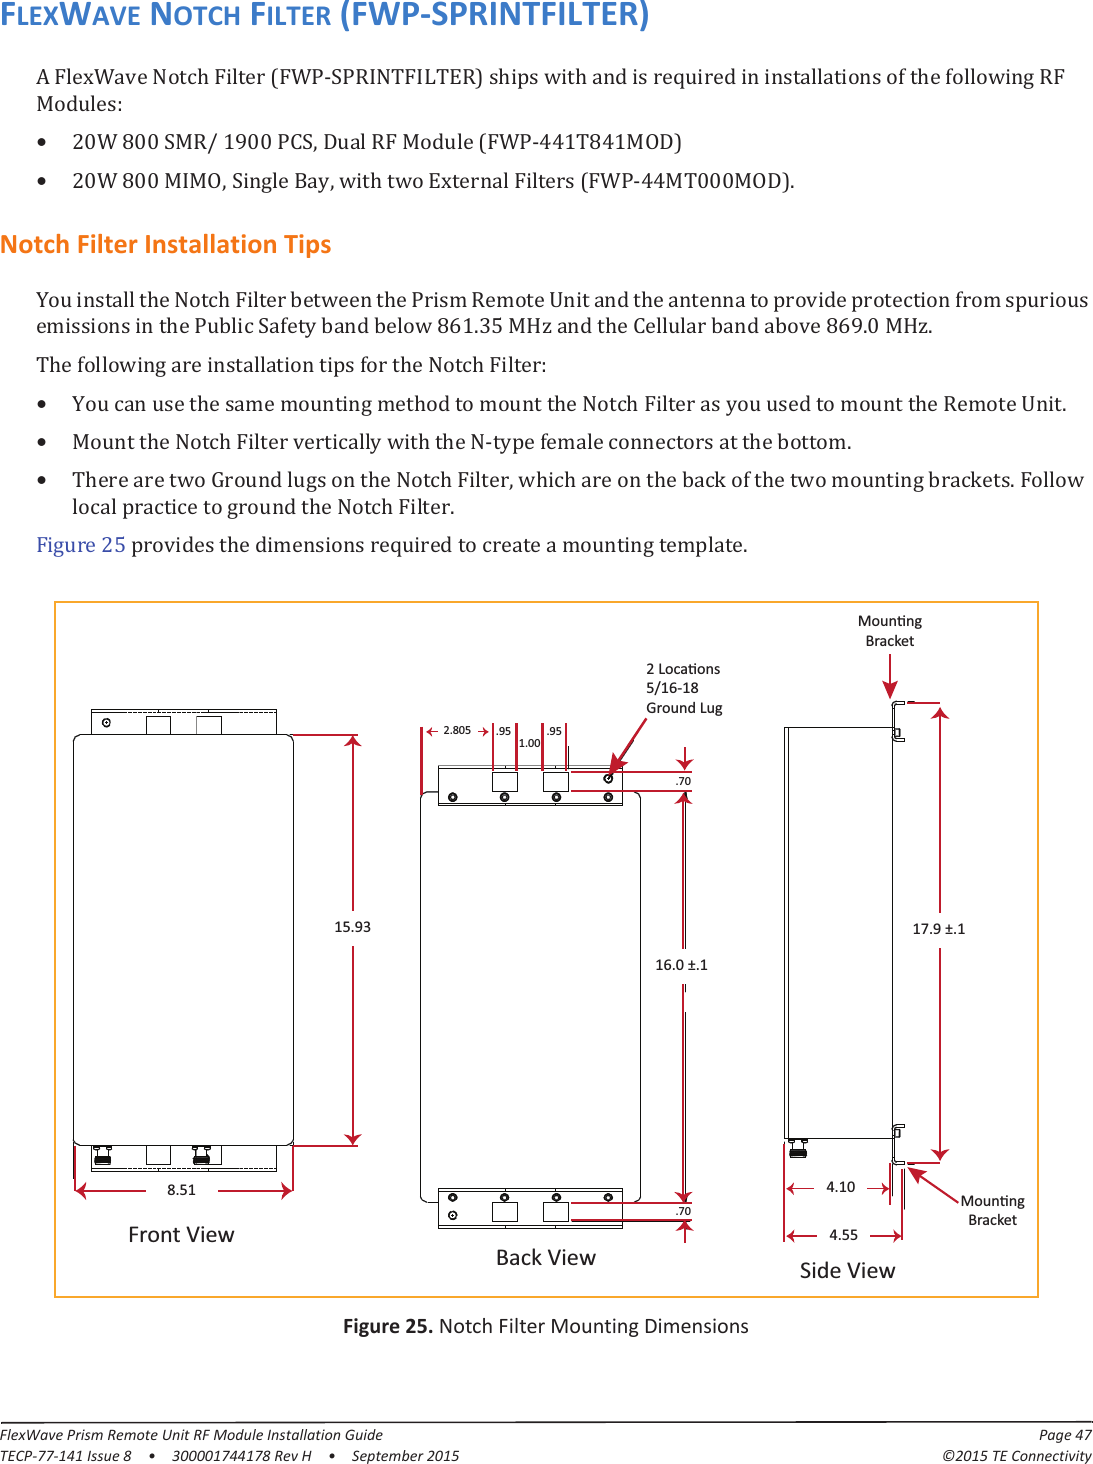 FlexWave Prism Remote Unit RF Module Installation Guide Page 47TECP-77-141 Issue 8  •  300001744178 Rev H  •  September 2015 ©2015 TE ConnectivityFLEXWAVE NOTCH FILTER (FWP-SPRINTFILTER)ȋǦȌǣ•ʹͲͺͲͲȀͳͻͲͲǡȋǦͶͶͳͺͶͳȌ•ʹͲͺͲͲǡǡȋǦͶͶͲͲͲȌǤNotch Filter Installation Tipsͺ͸ͳǤ͵ͷͺ͸ͻǤͲǤǣ•Ǥ•ǦǤ•ǡǤǤʹͷǤFigure 25. Notch Filter Mounting Dimensions16.0 ±.1.70.702.805 .95 .951.002 LocaƟons5/16-18Ground LugFront ViewSide ViewBack View4.5517.9 ±.14.10 MounƟngBracket15.938.51MounƟngBracket